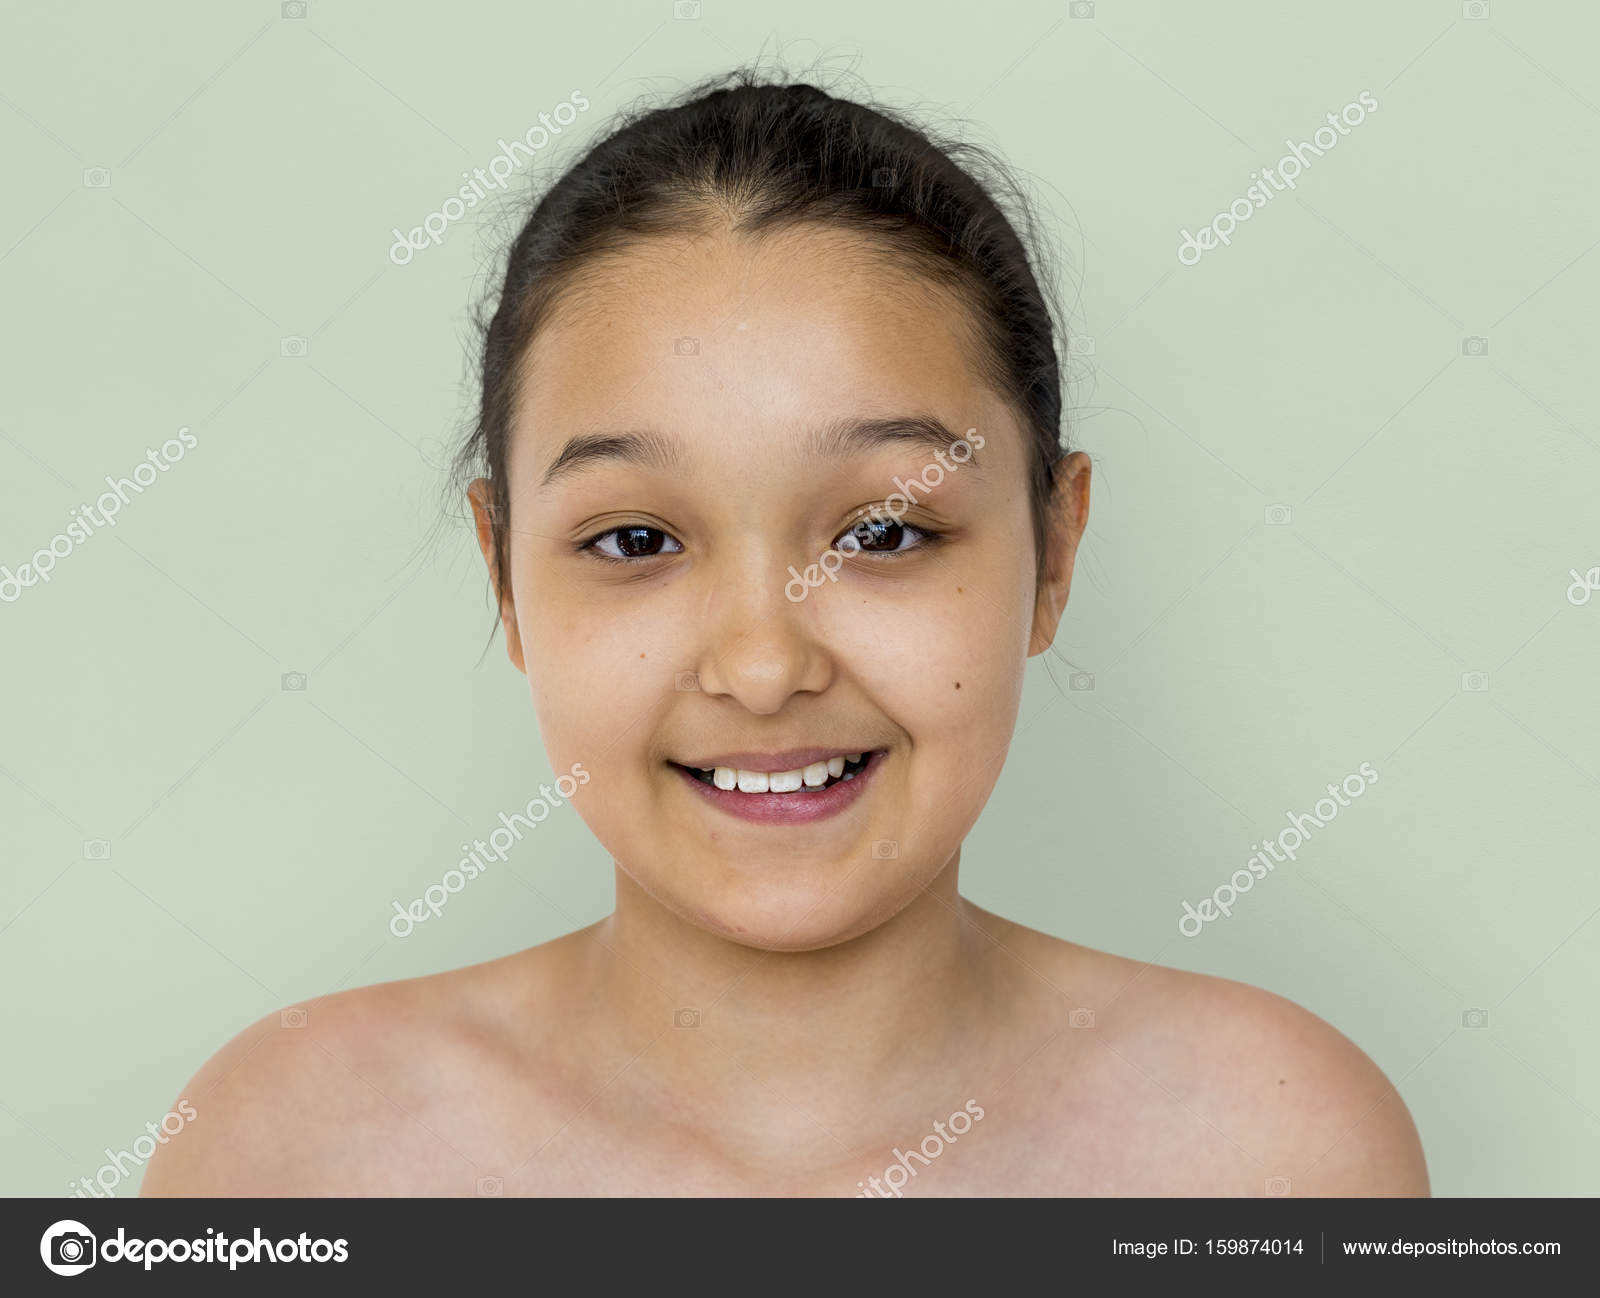 https://st3.depositphotos.com/3591429/15987/i/1600/depositphotos_159874014-stock-photo-girl-with-bare-chest.jpg